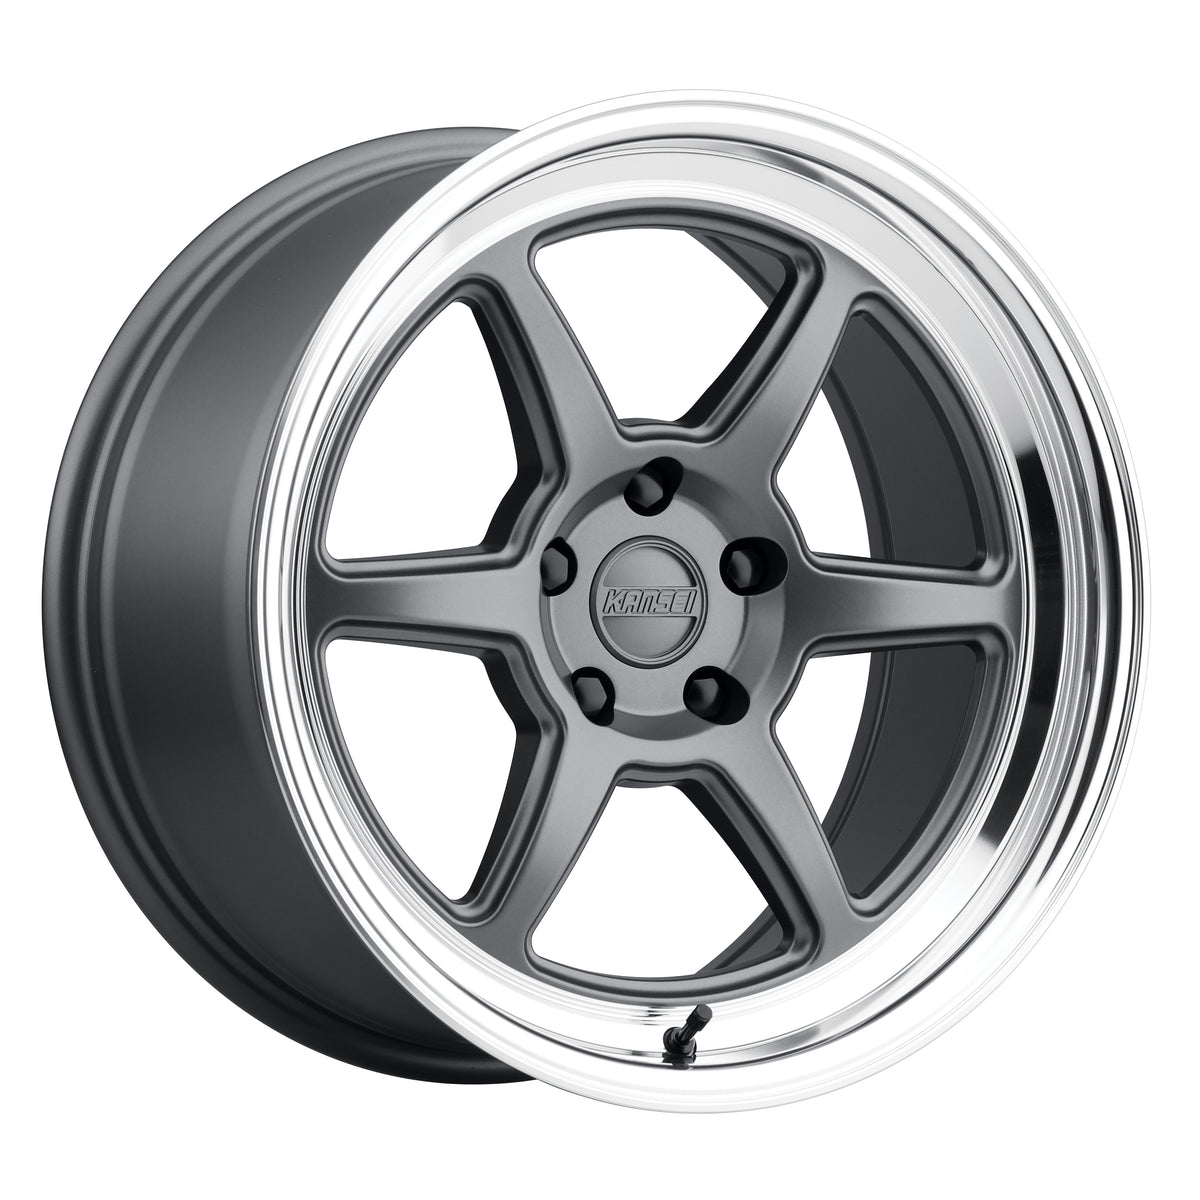 K14G ROKU Wheel, Size: 18" x 9.50", Bolt Pattern: 5 x 112 mm, Backspace: 6.75" [Finish: Grey and Machined Lip]